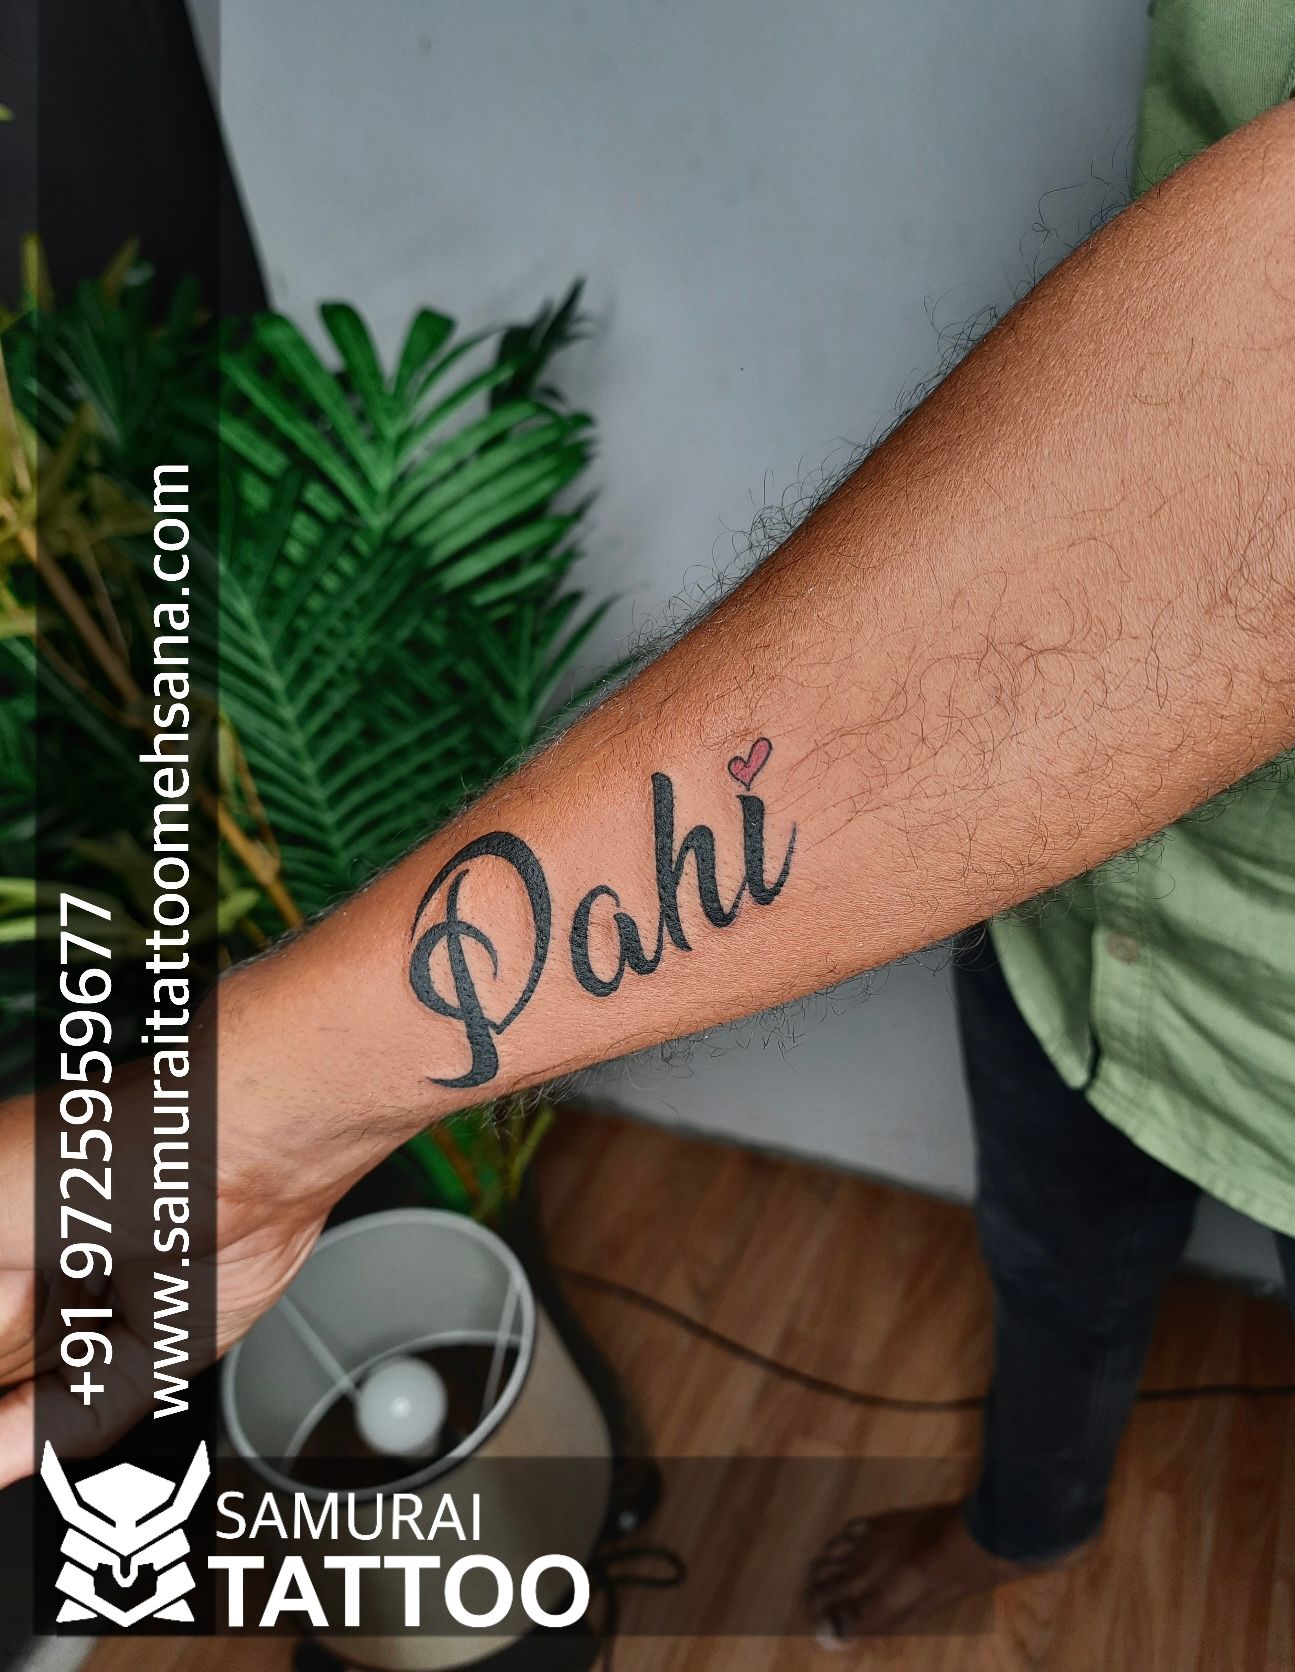 Abhi name tattoo requsted tattoo forfan foryourpage tiktokindia    TikTok